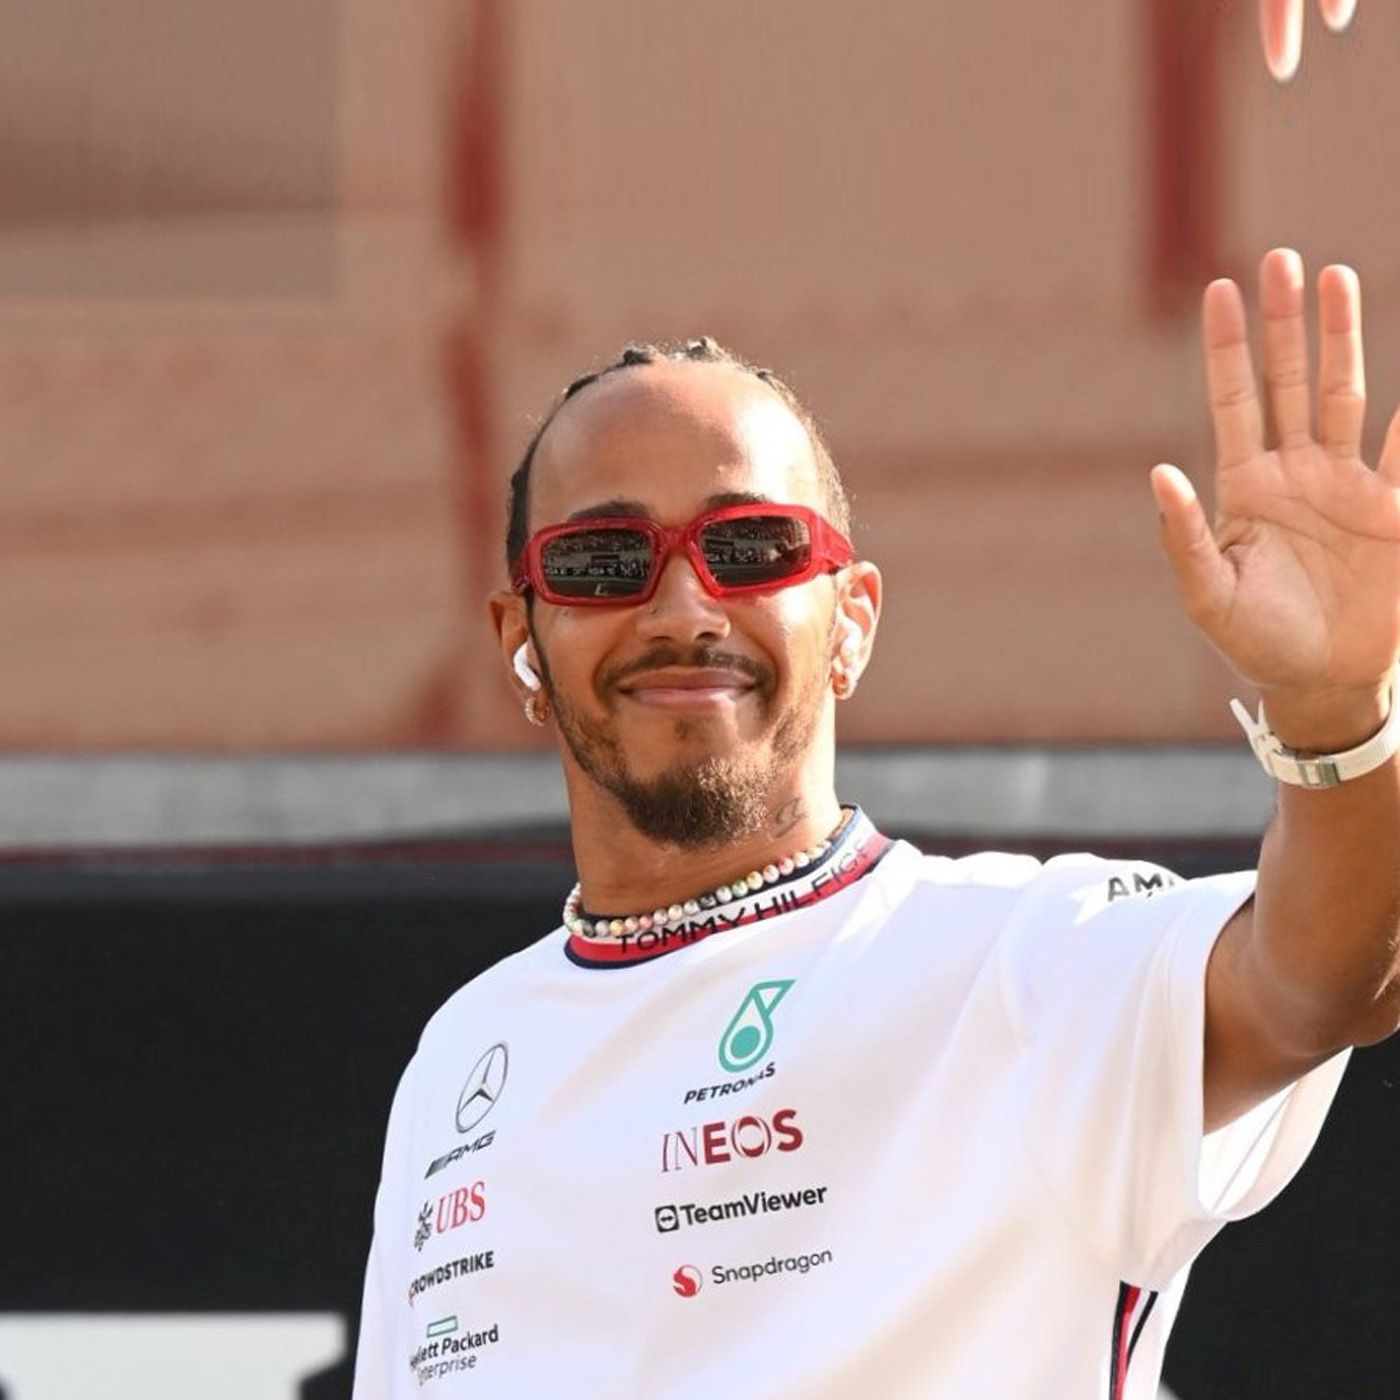 BOMBA! Hamilton acerta em trocar Mercedes por Ferrari?